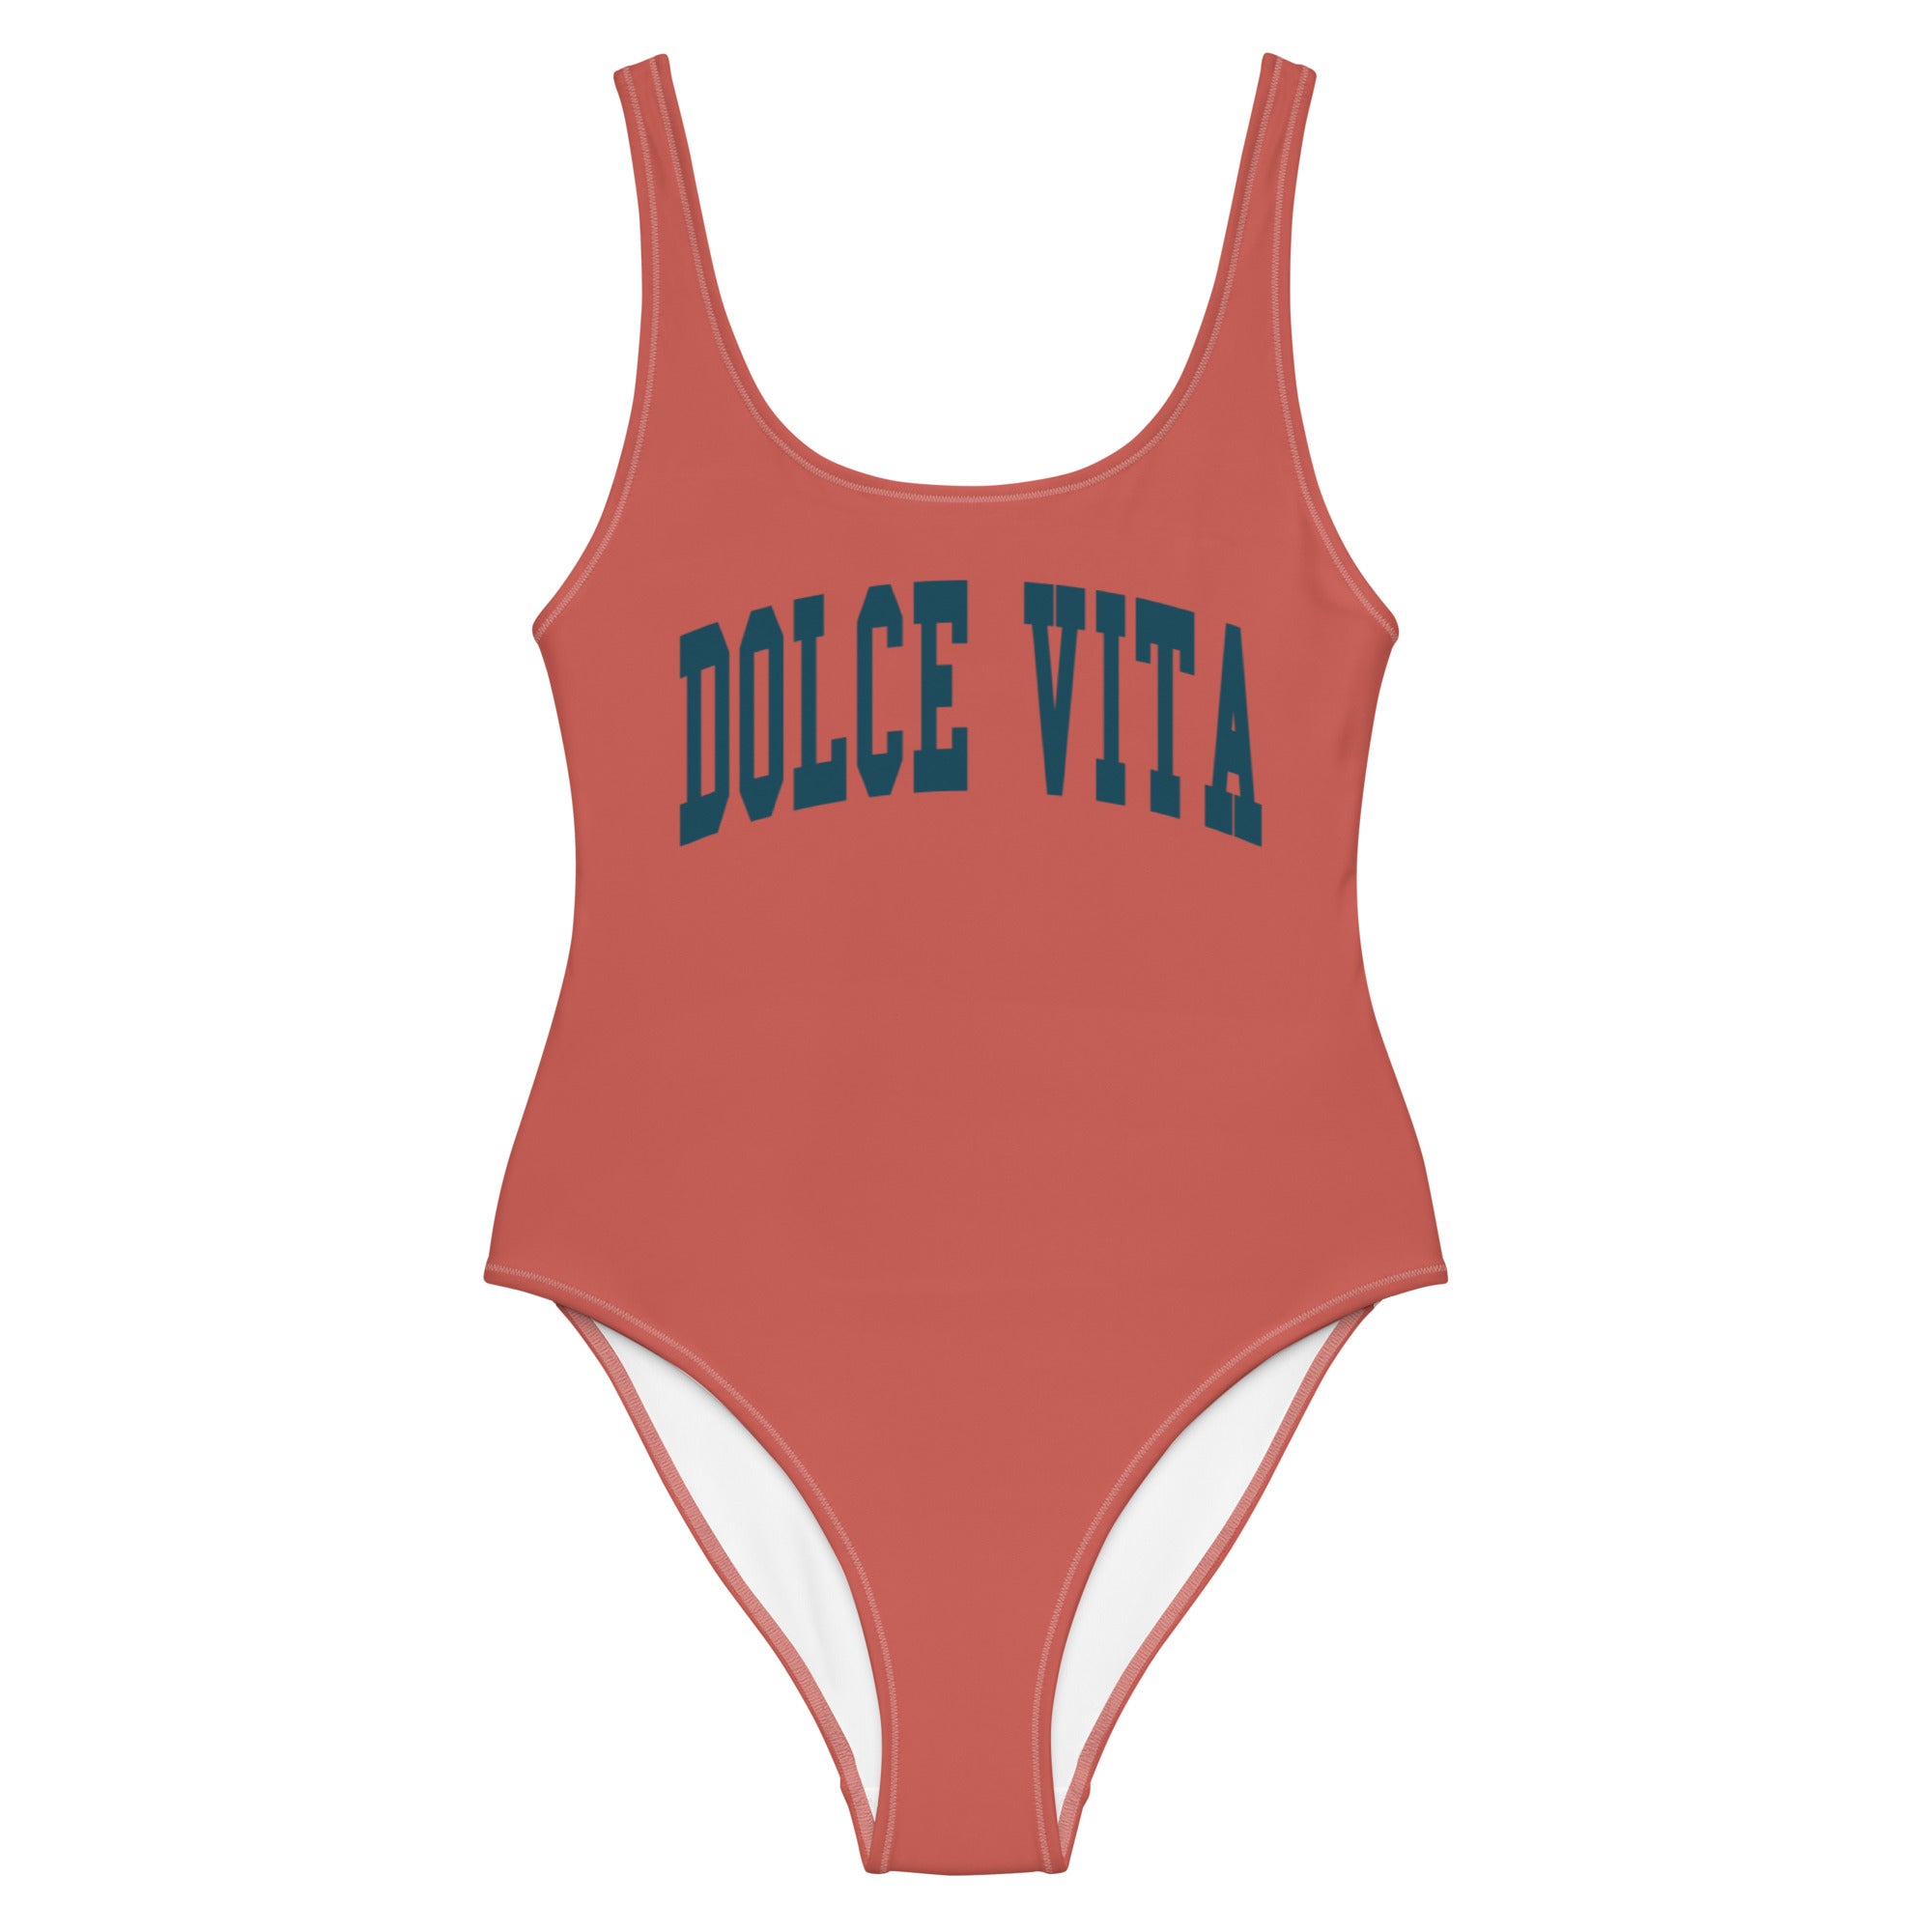 La Dolce Vita - Swimsuit - The Refined Spirit